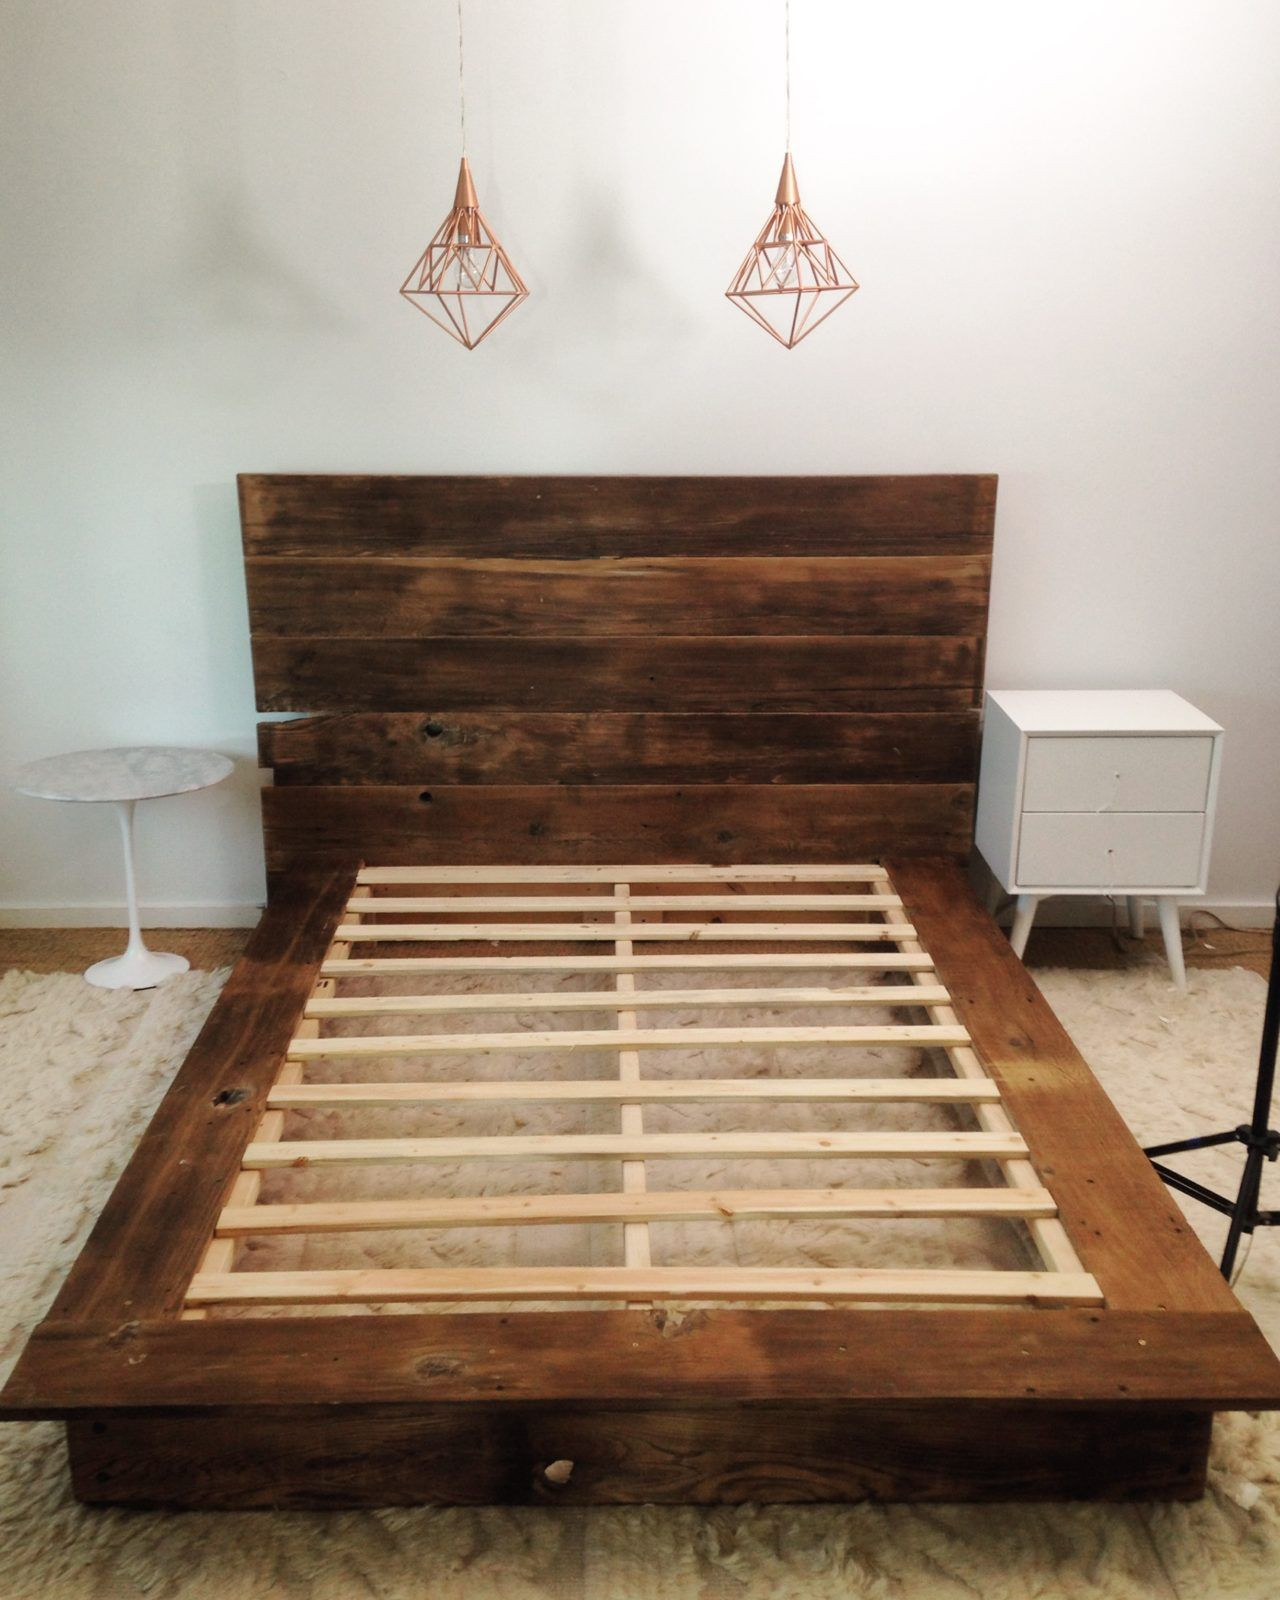 Best ideas about DIY Wood Platform Bed
. Save or Pin DIY Reclaimed Wood Platform Bed in 2019 Home Now.